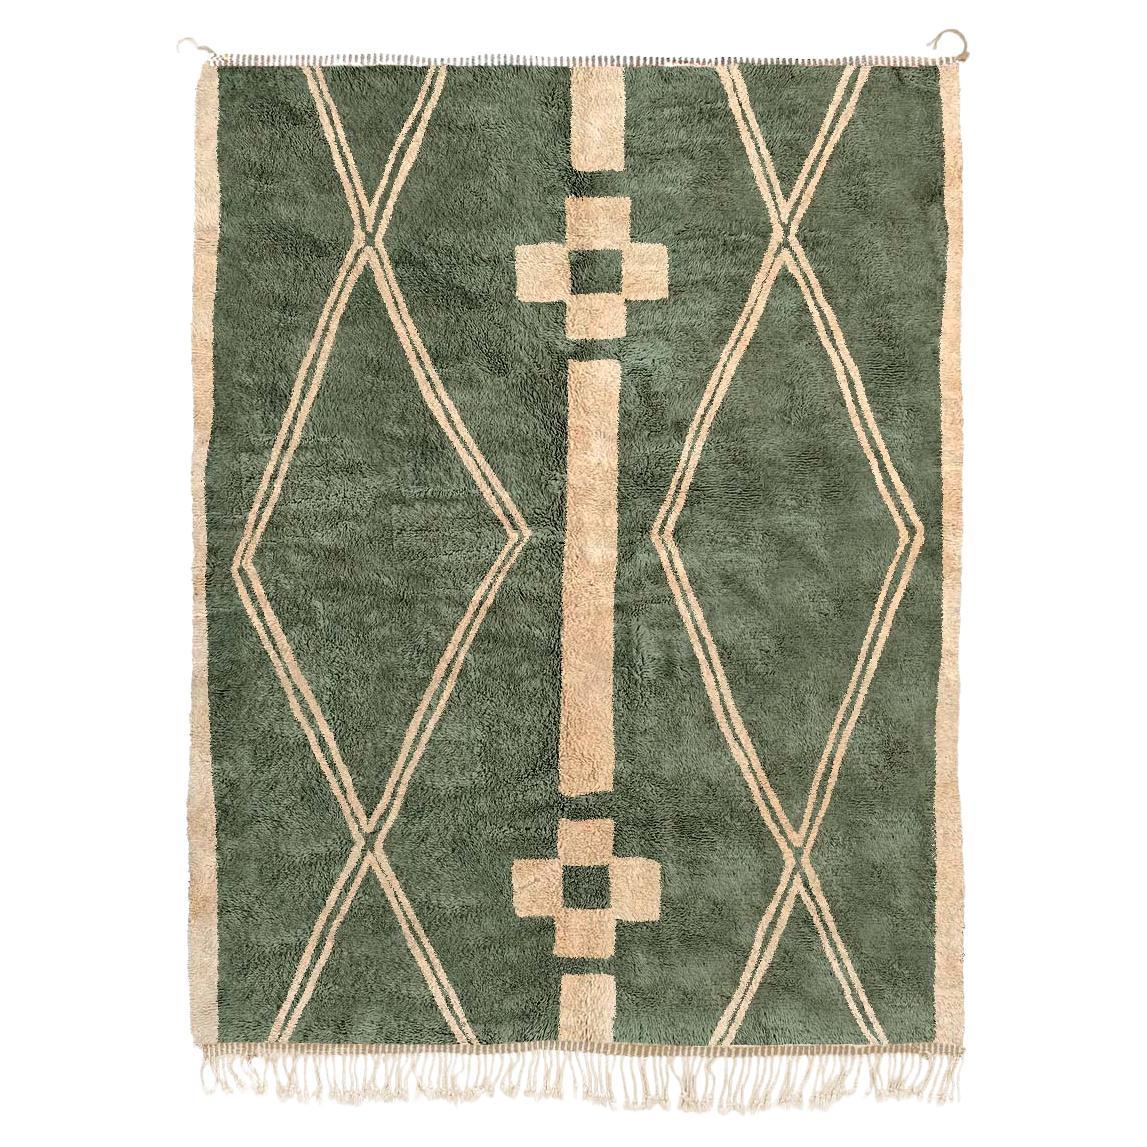 Moroccan Beni Mrirt rug, Tribal Pattern Green Color Berber rug, In Stock